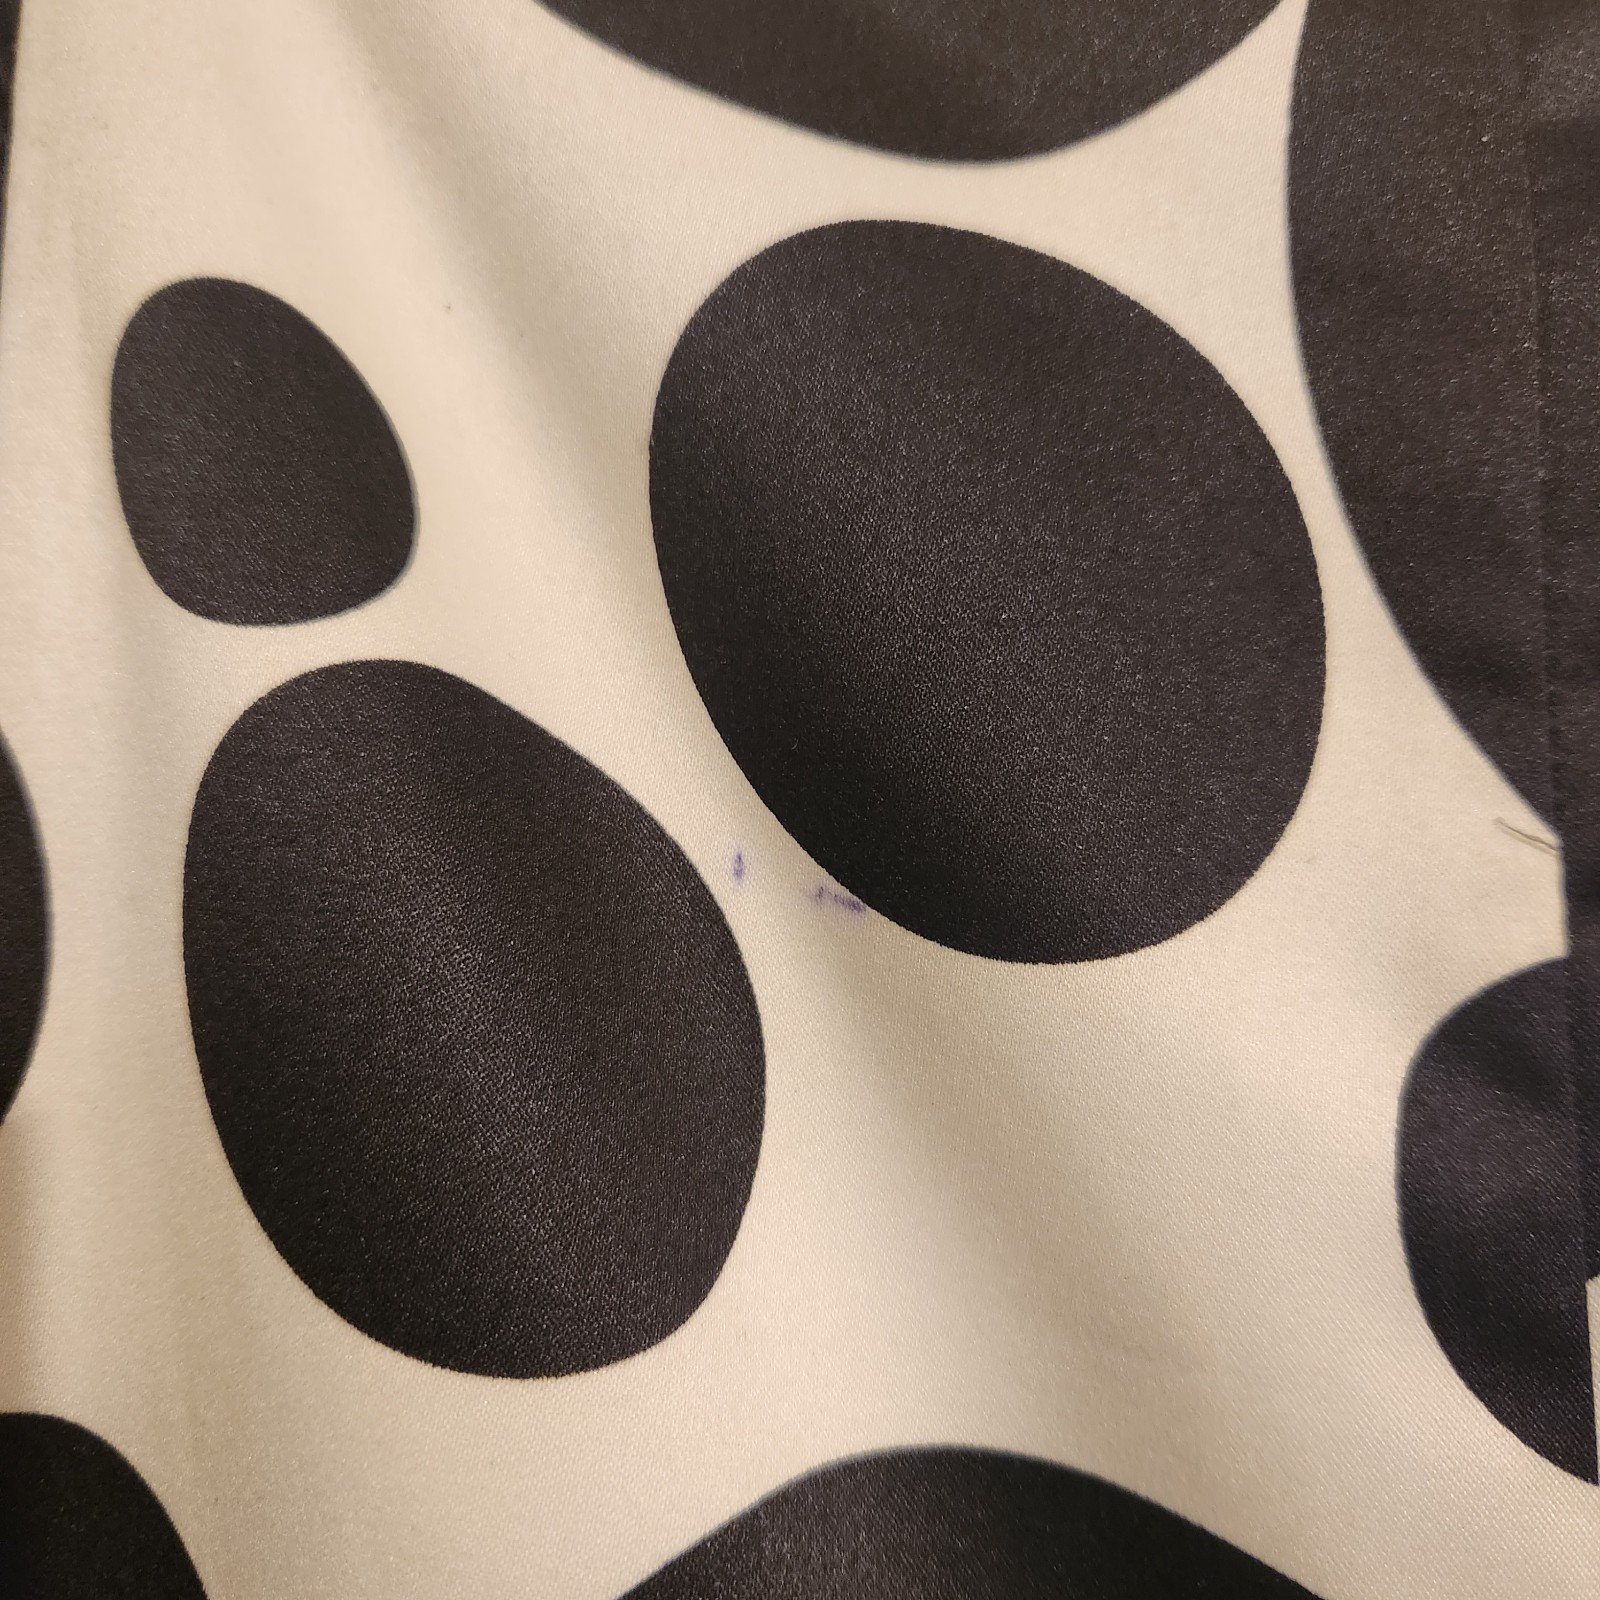 reasonable price Venus Black & White Flare Polka Dot Maxi Skirt Size 14 P4YD2akd0 Online Exclusive